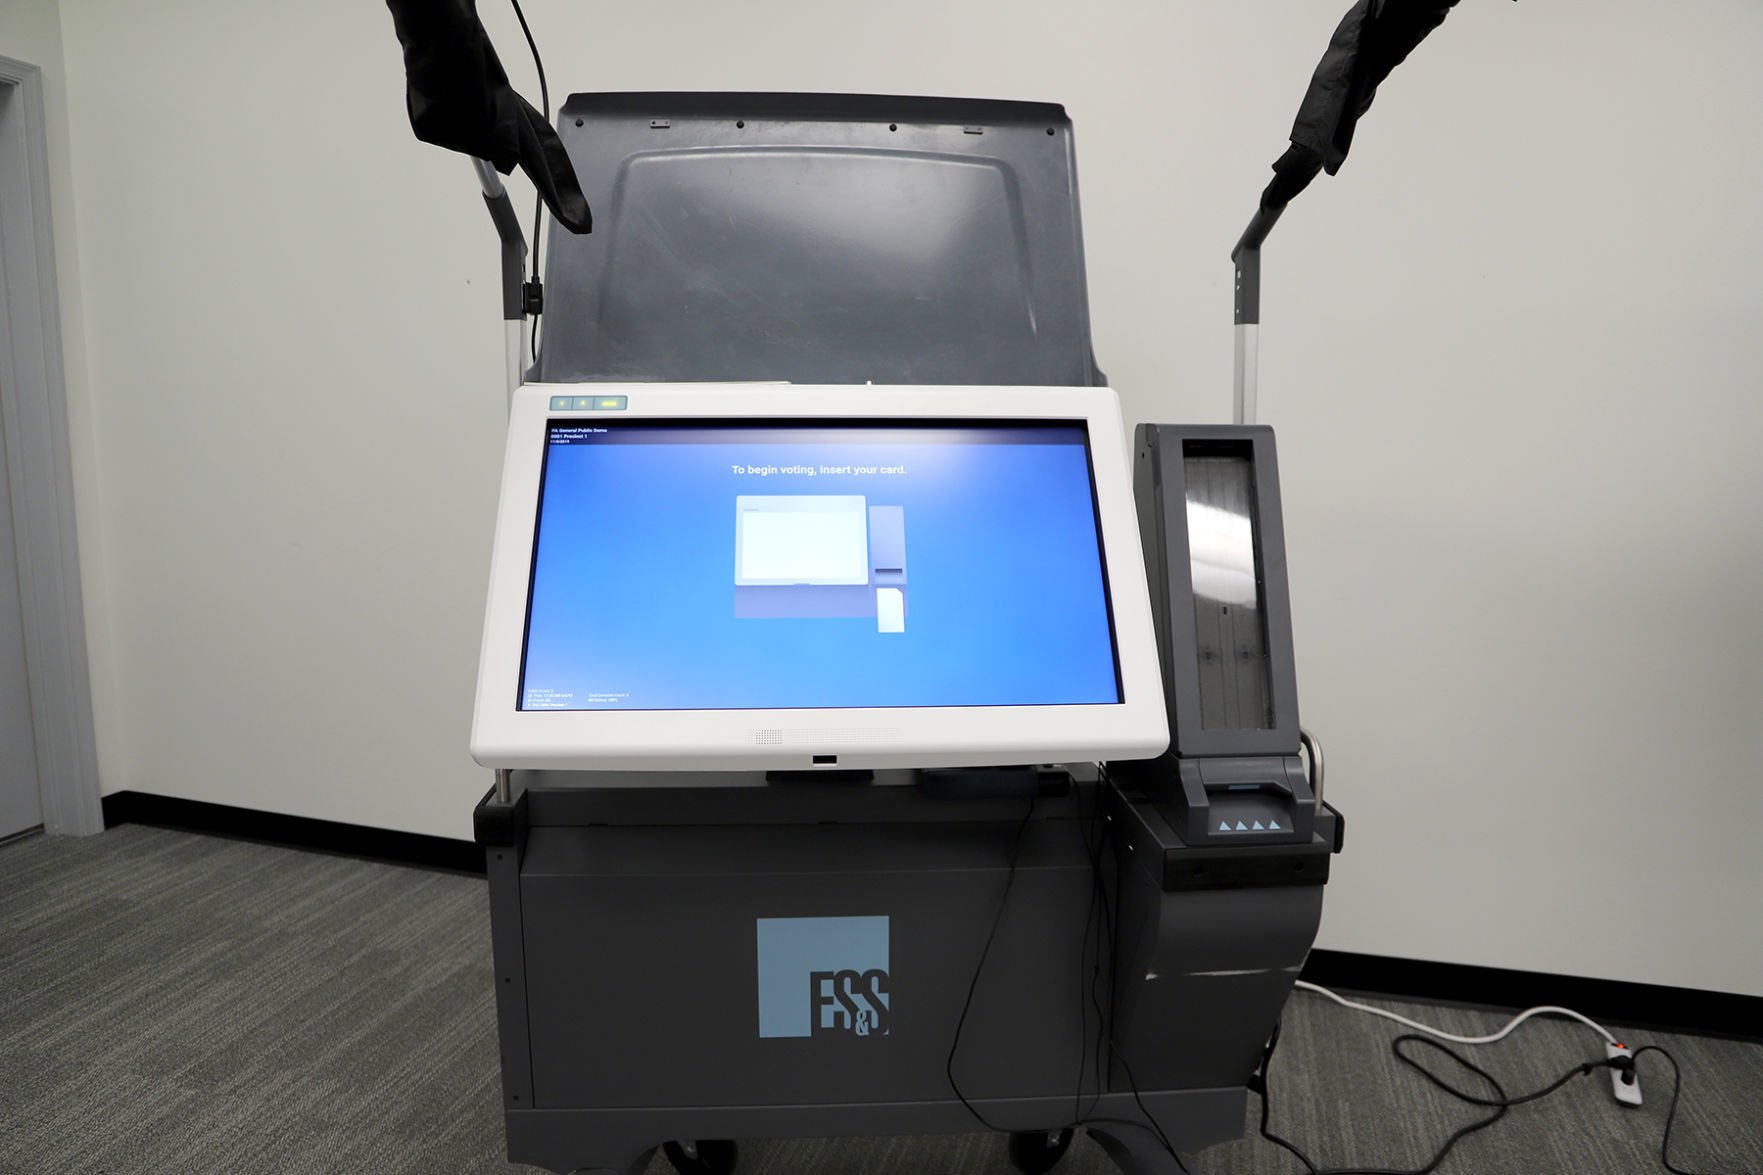 demo imagecast voting machine